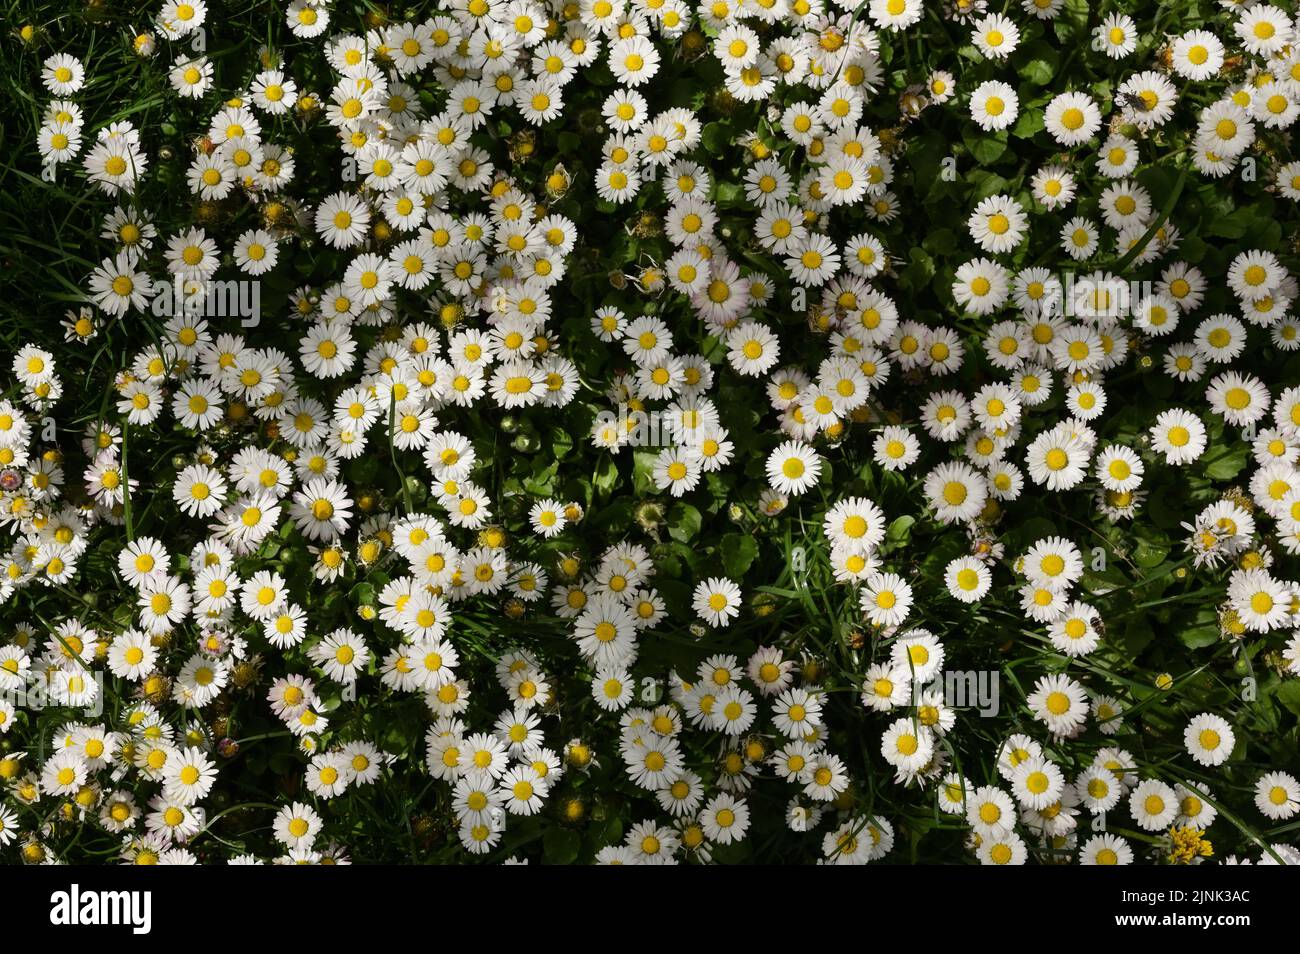 daisy, bellis perennis, daisies Stock Photo